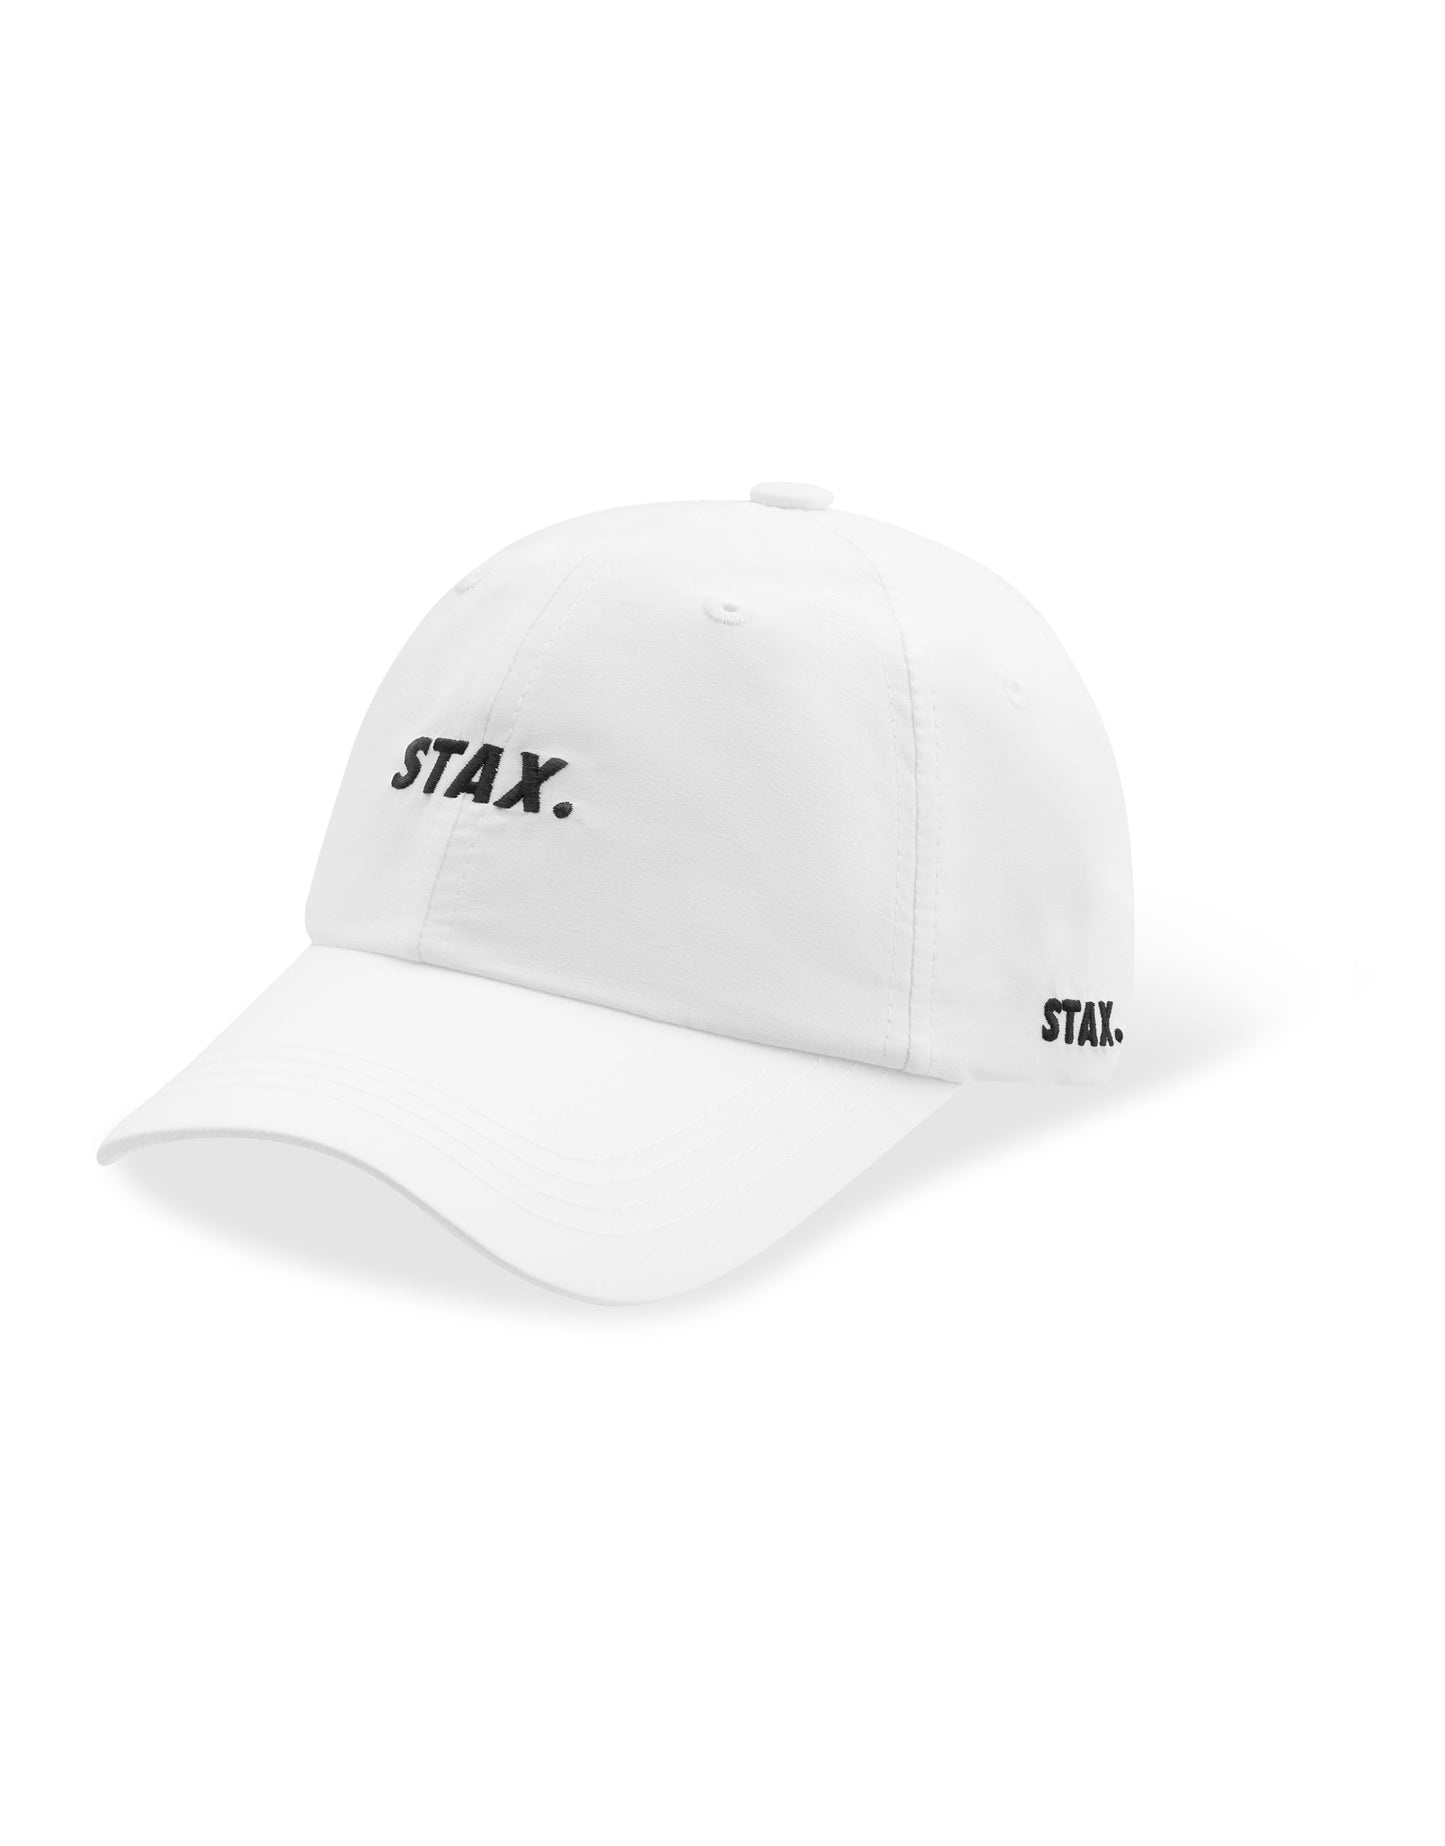 STAX. Official Dad Cap - White (Black logo)